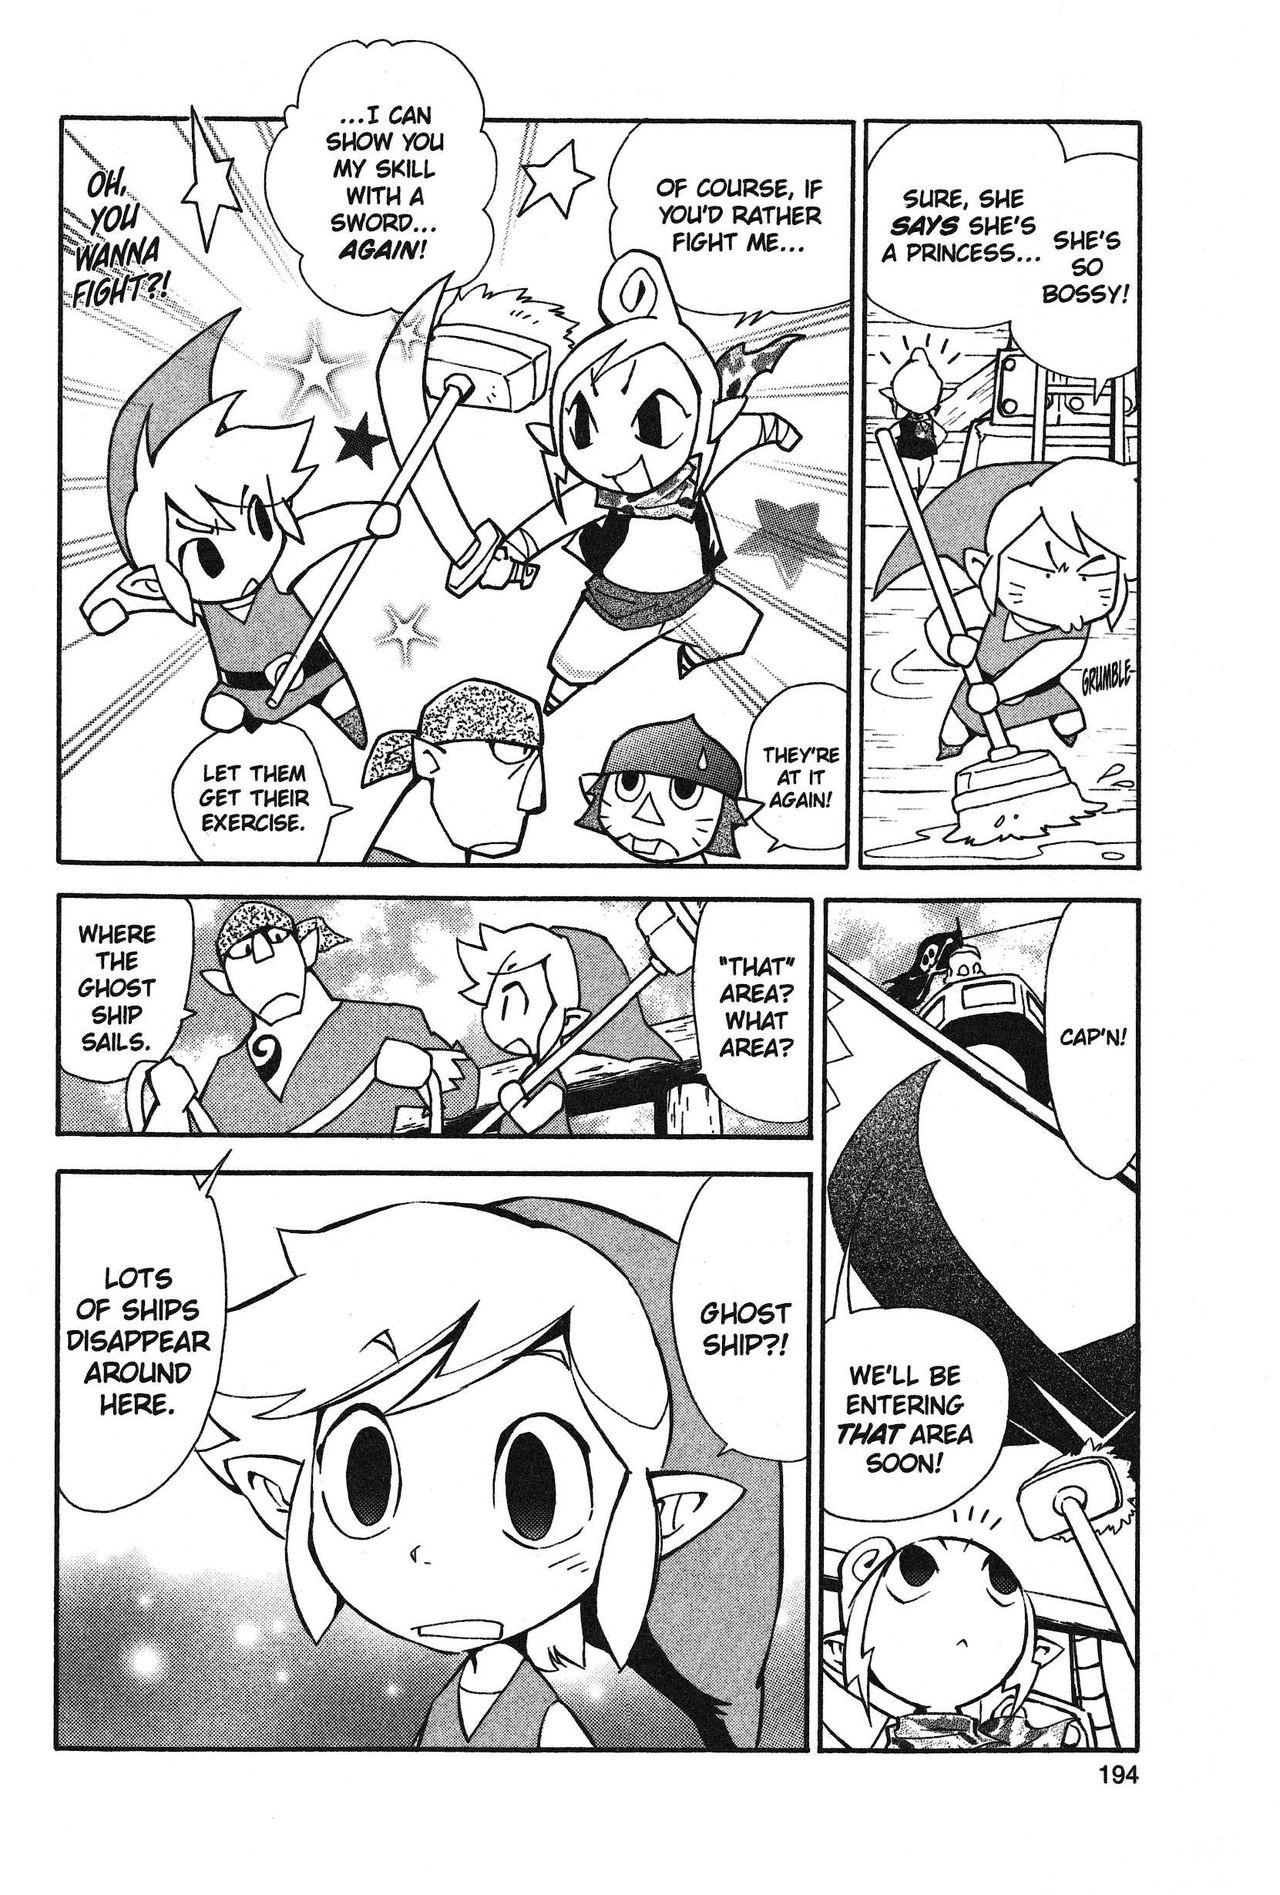 Real Amateurs The Legend of Zelda - Phantom Hourglass Manga - The legend of zelda Verified Profile - Page 5